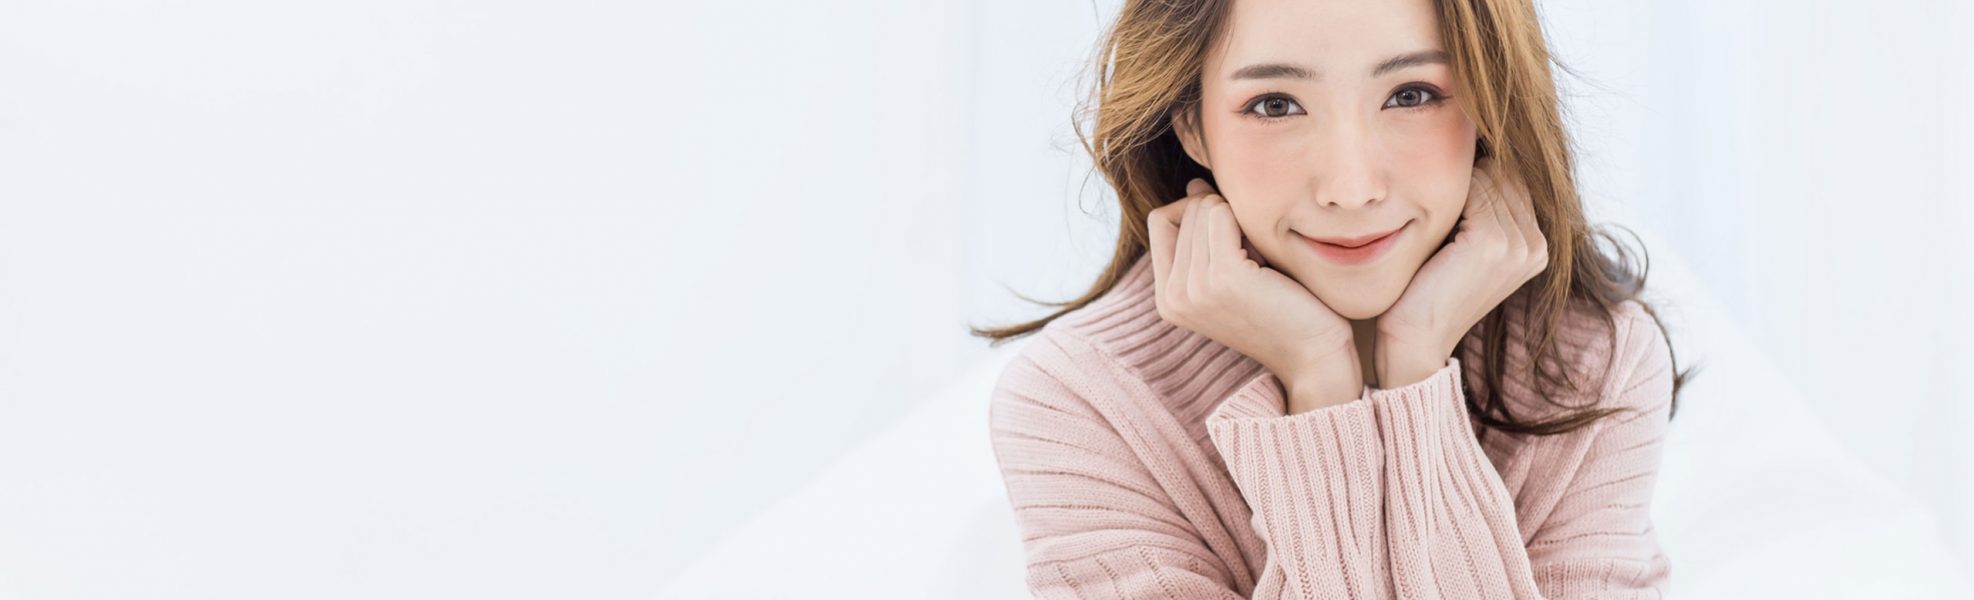 hifu treatment asian women in pink sweater